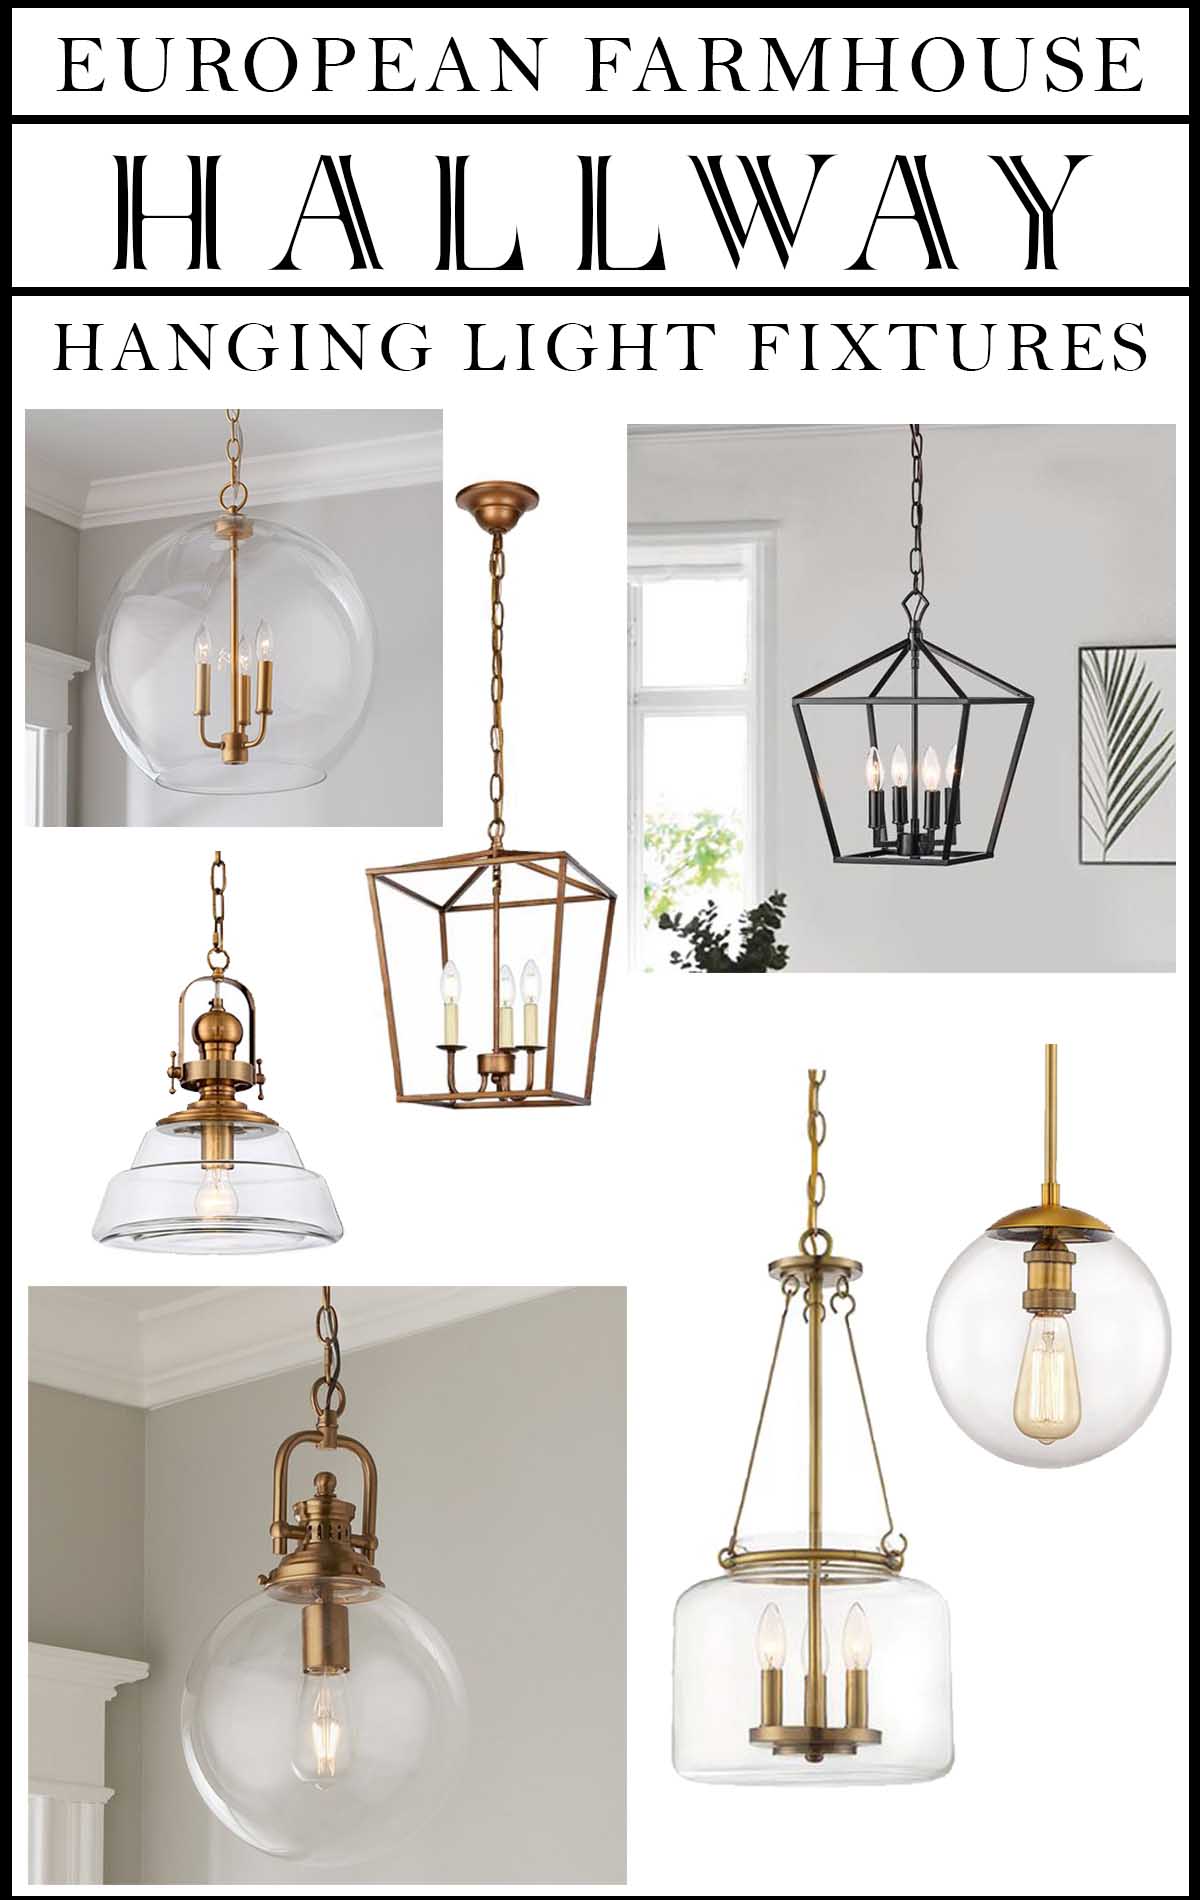 kam Hurtig reservoir European Farmhouse Hallway Hanging Light Fixtures - Petite Modern Life